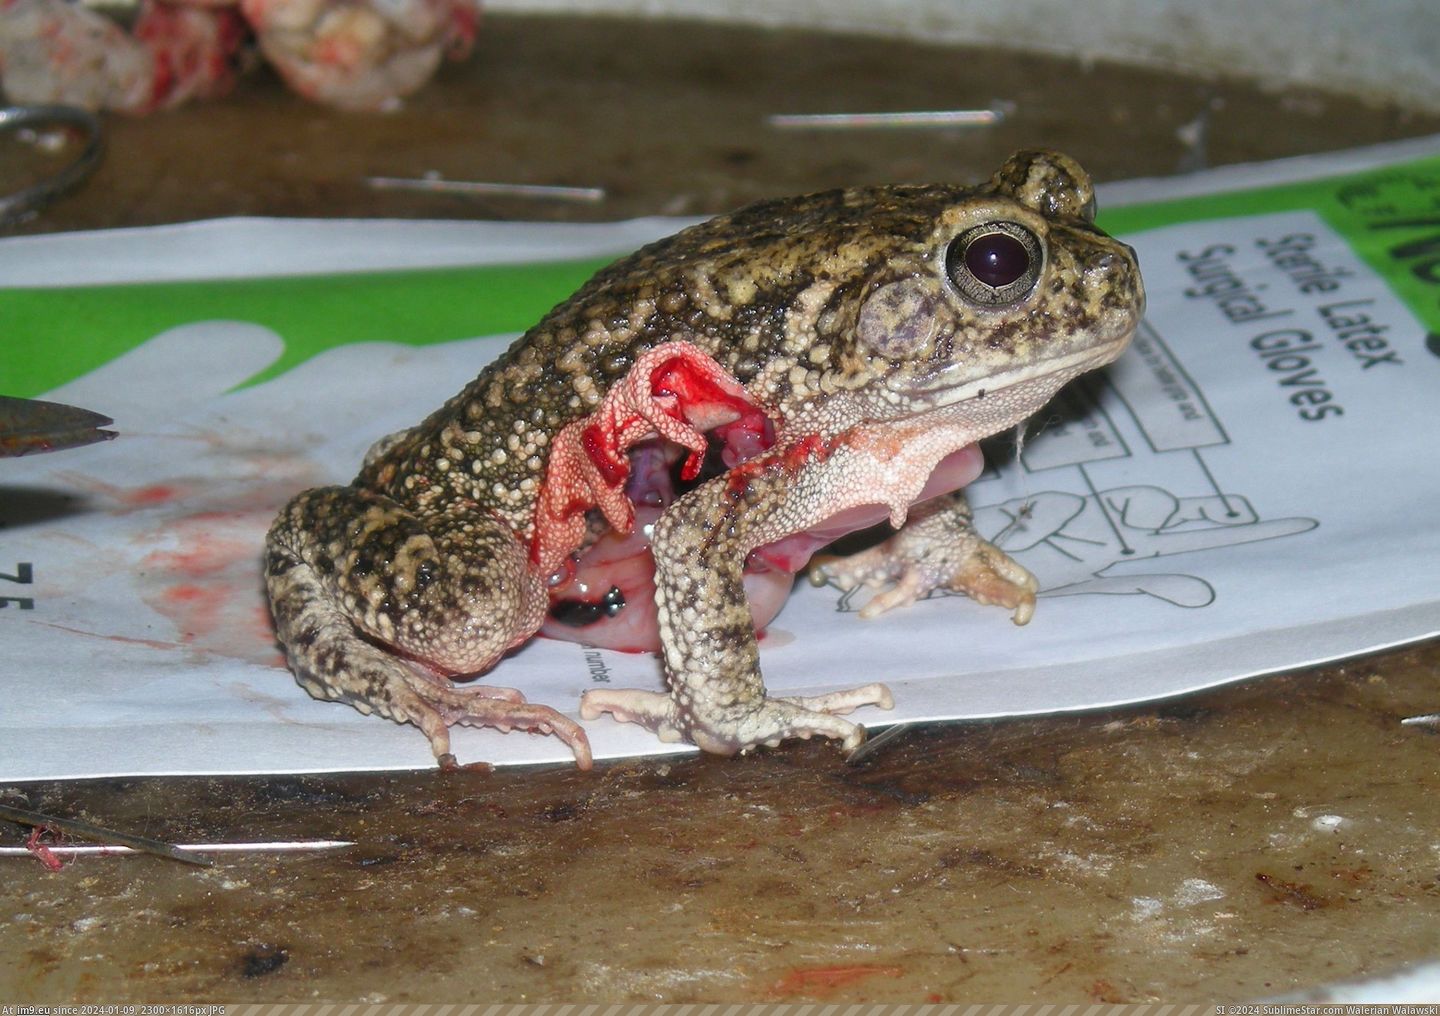 #Wtf #Sleep #Frog #Chloroform #Vivisected #Wikipedia #Induced #Wakes [Wtf] A frog being vivisected wakes up from a chloroform-induced 'sleep.' [From Wikipedia.] Pic. (Изображение из альбом My r/WTF favs))